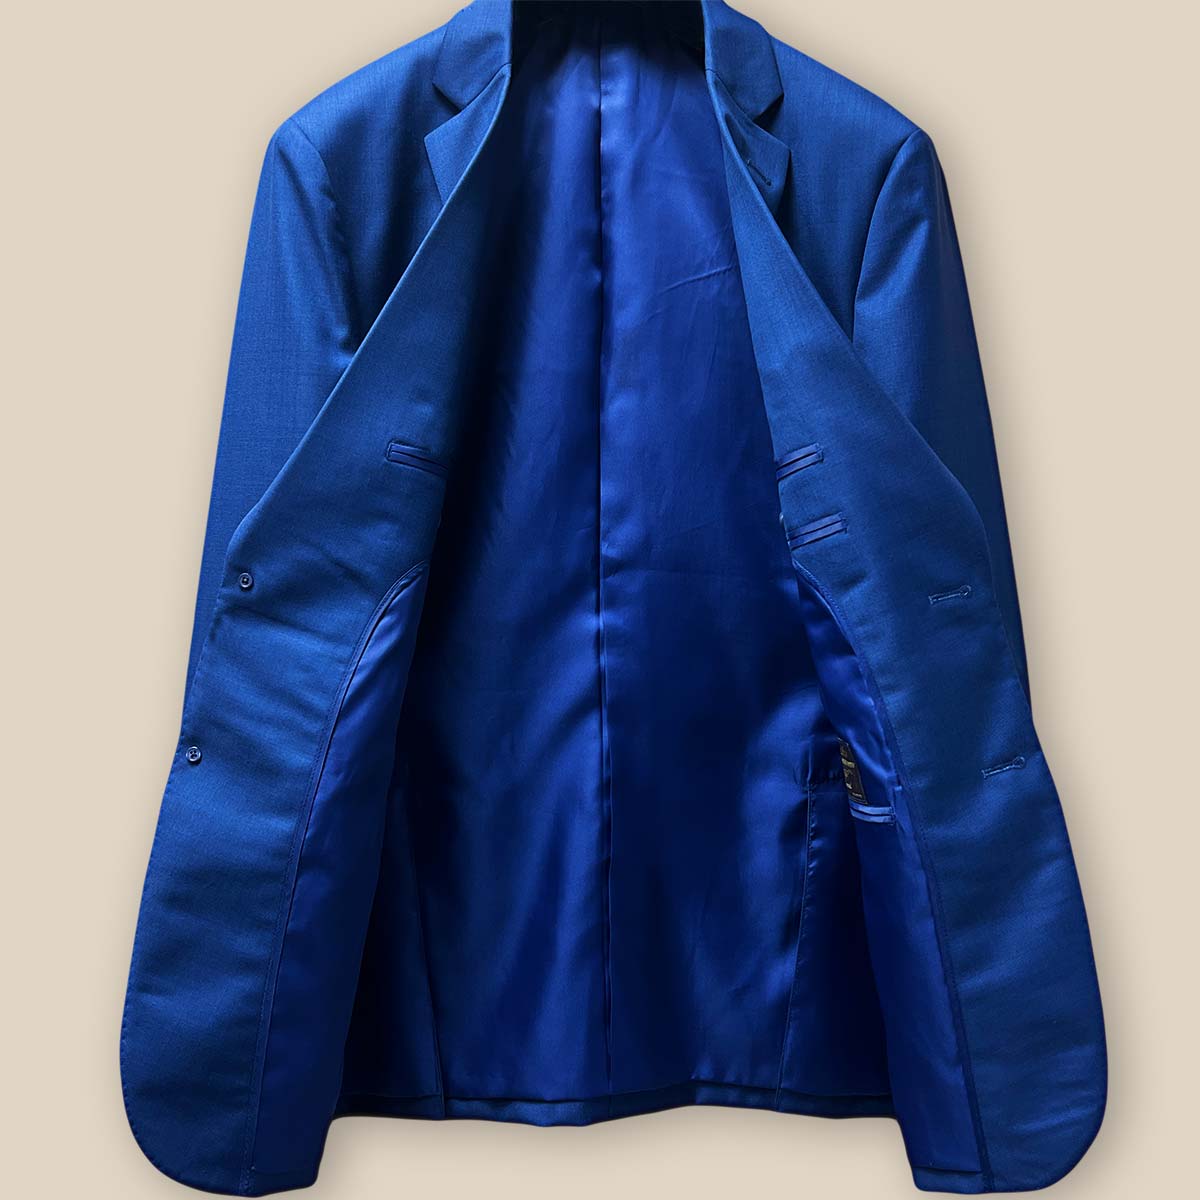 Full view of the inside lining of the cobalt blue sharkskin jacket, highlighting the royal blue silk bemberg lining.